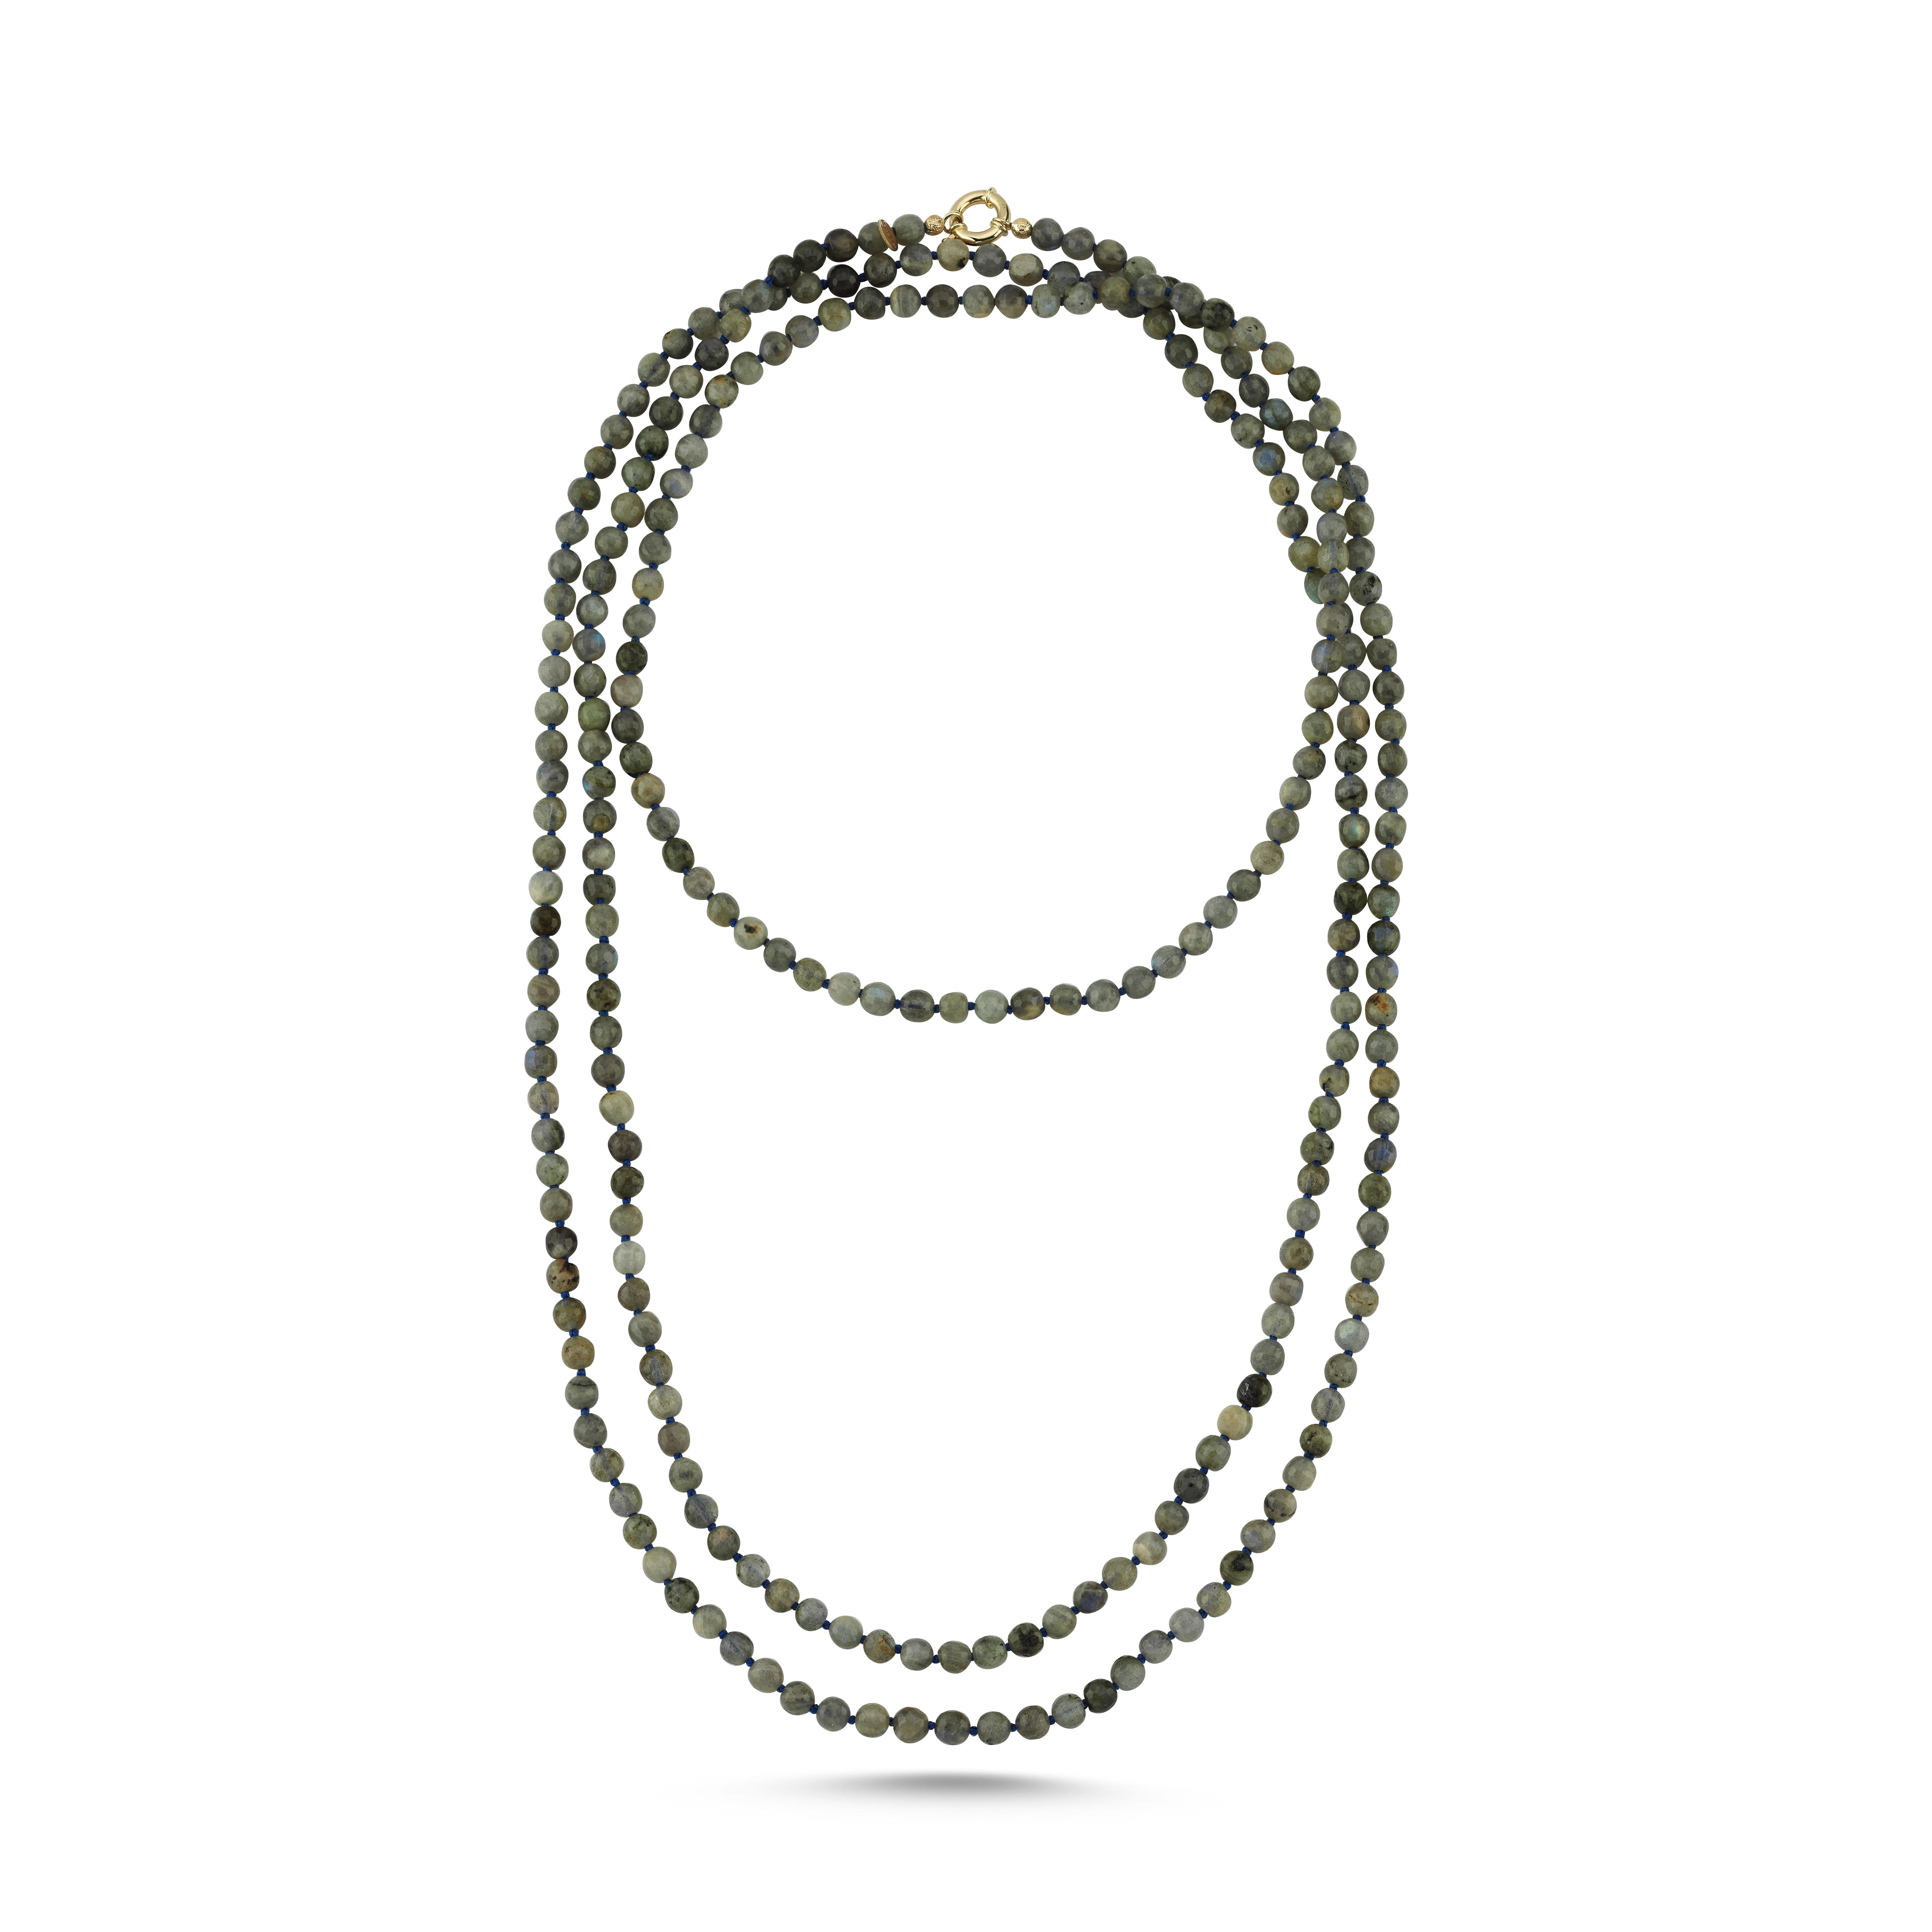 Labradorite Beads
14k Gold Clasp